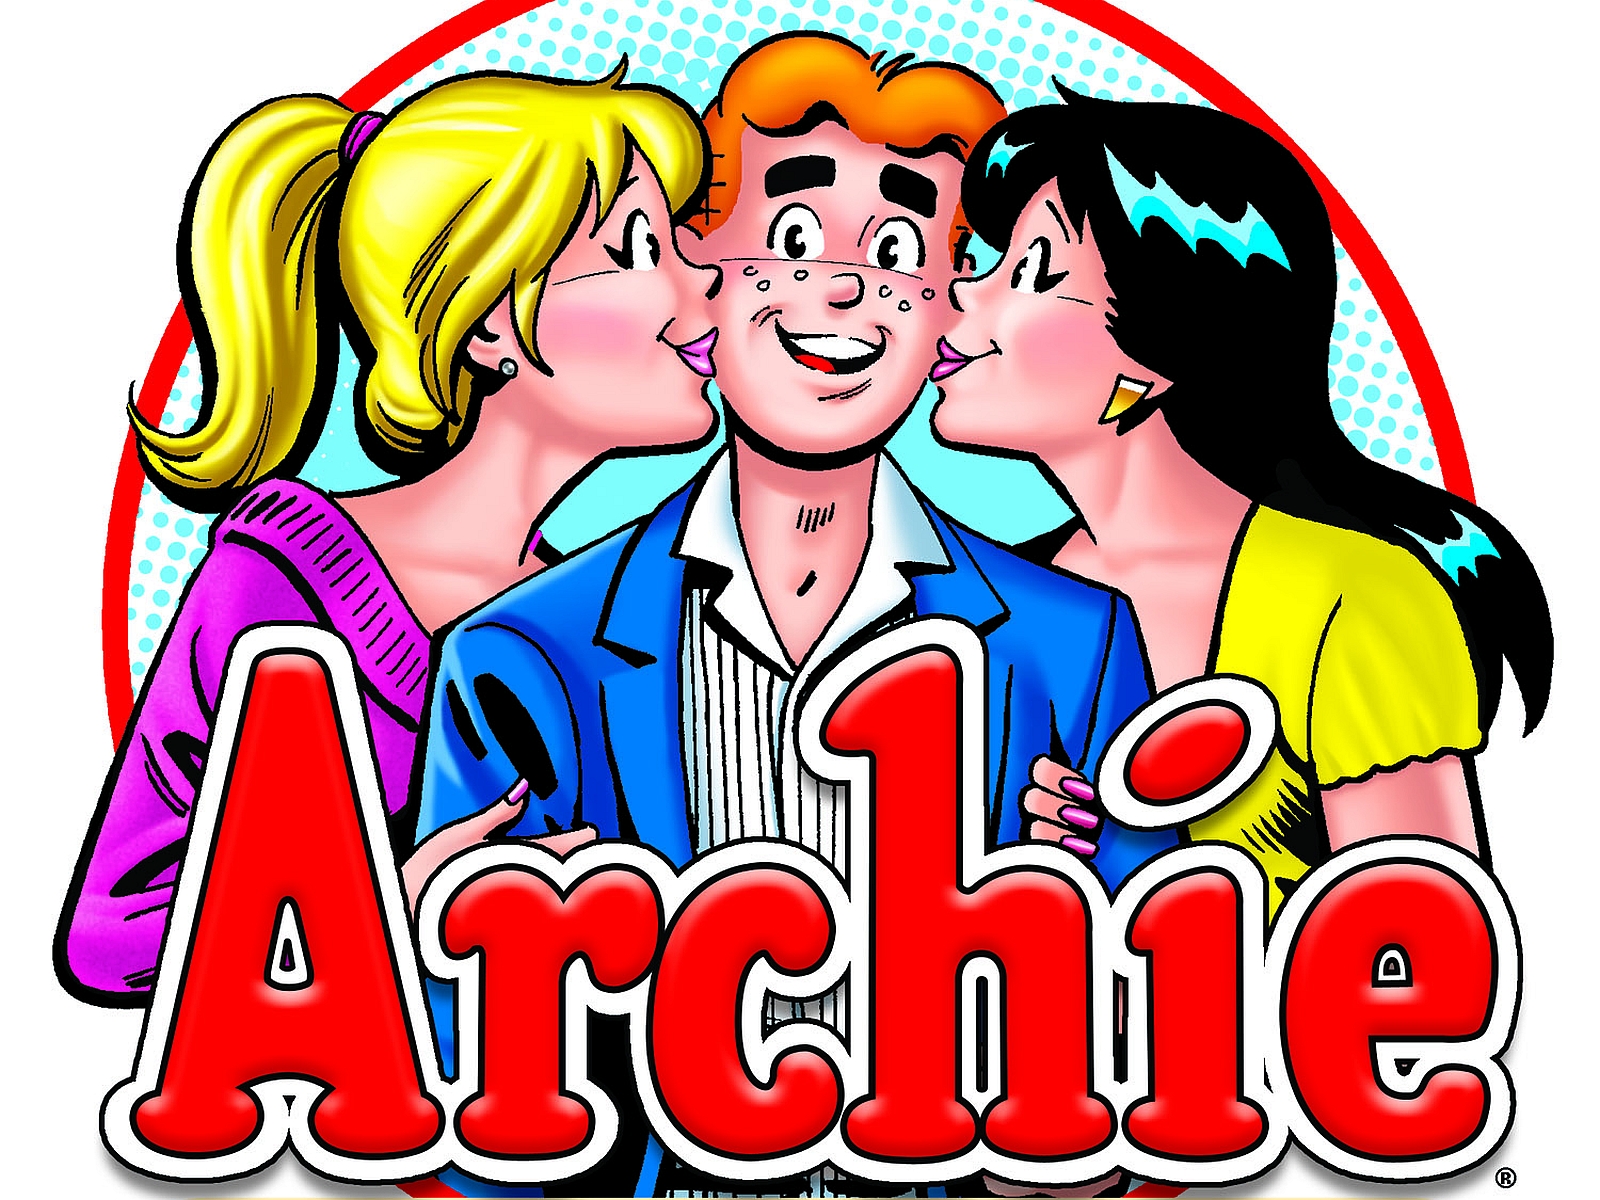 Archie Puter Wallpaper Desktop Background